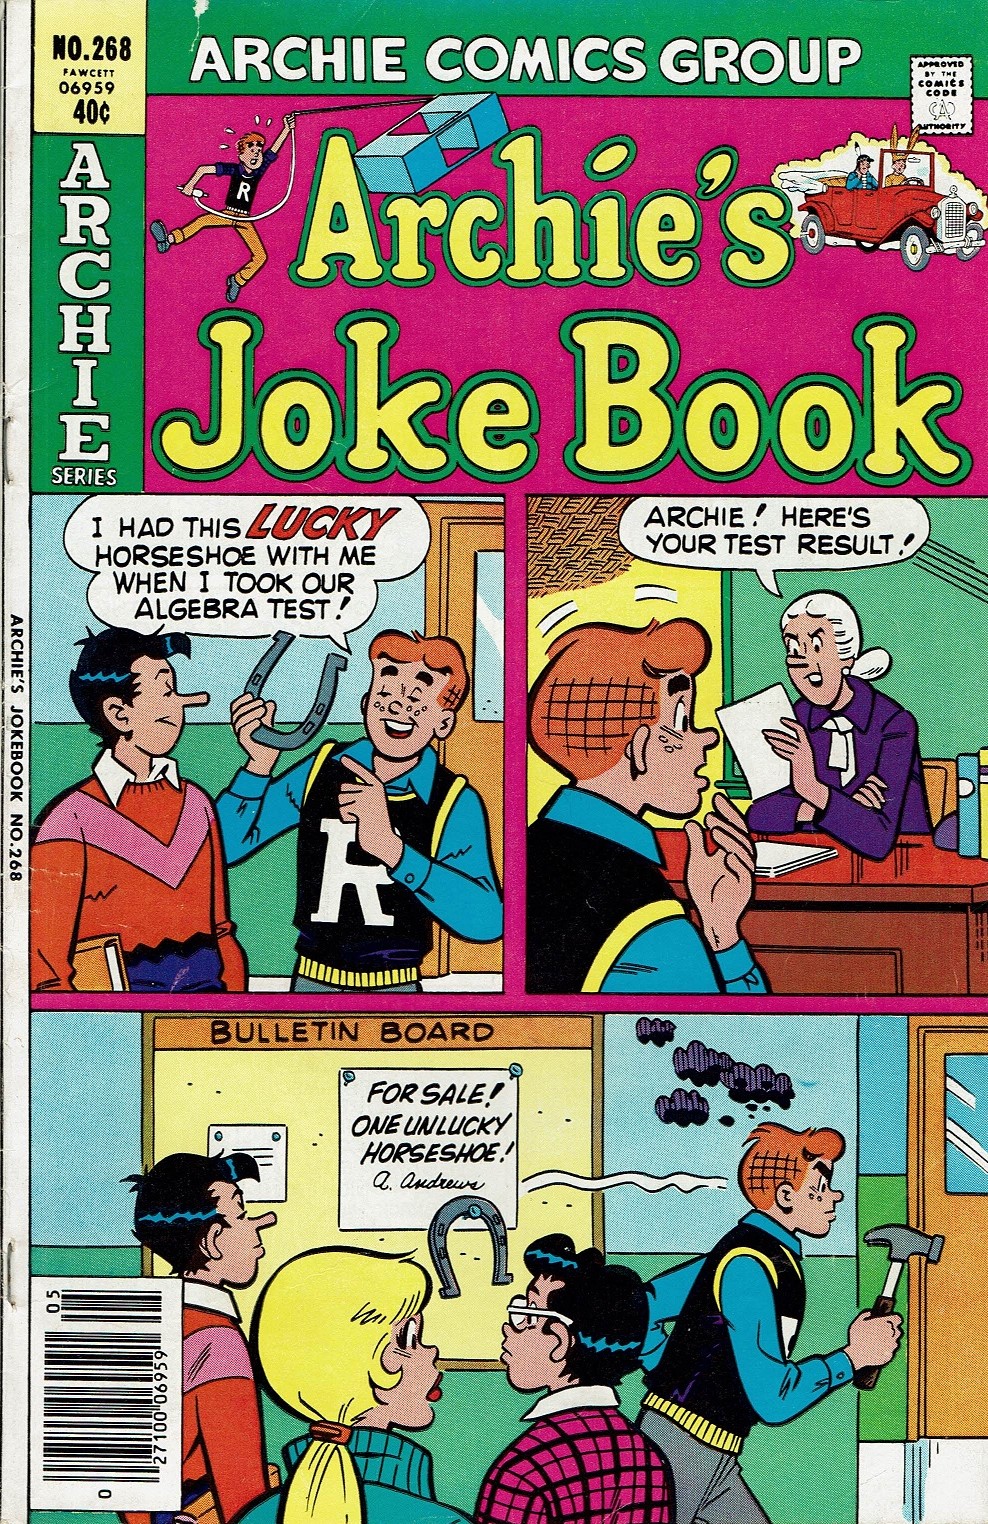 Archie's Joke Book Magazine issue 268 - Page 1